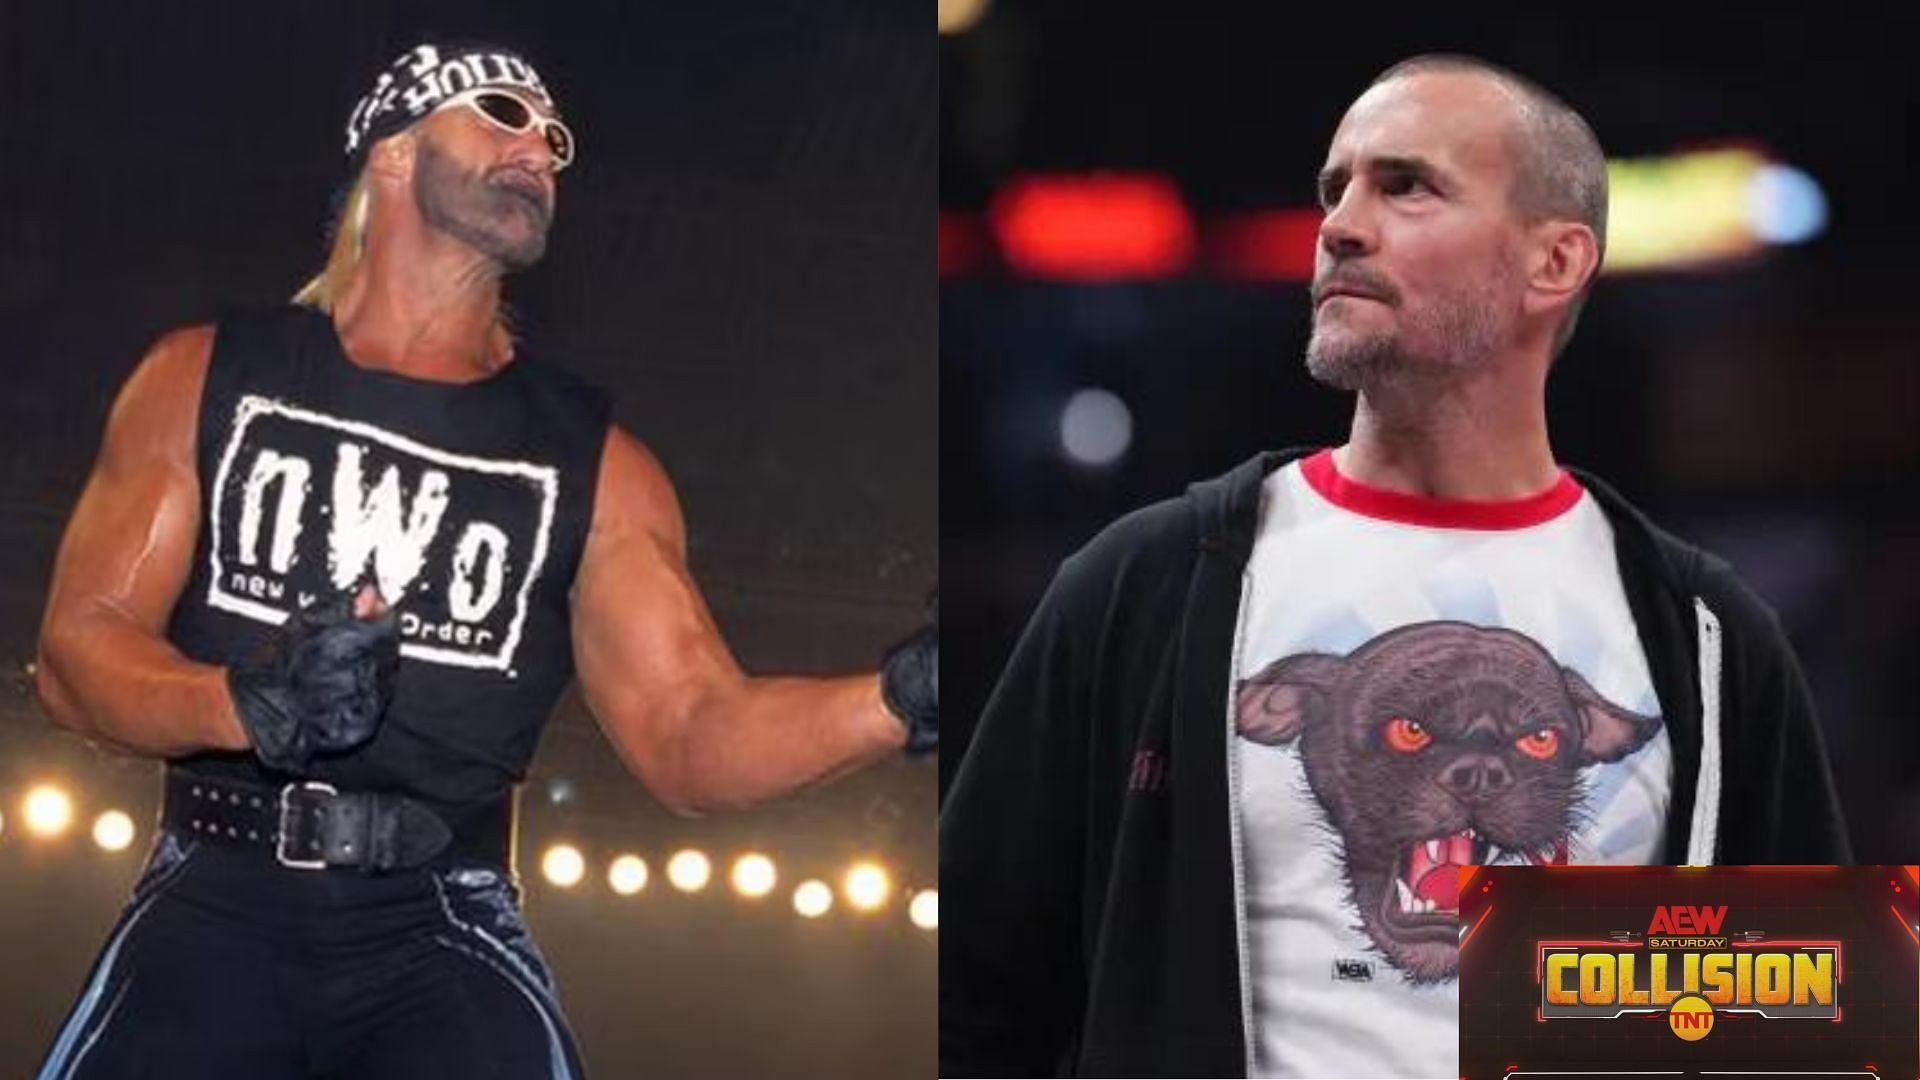 Has CM Punk turned into Hulk Hogan?